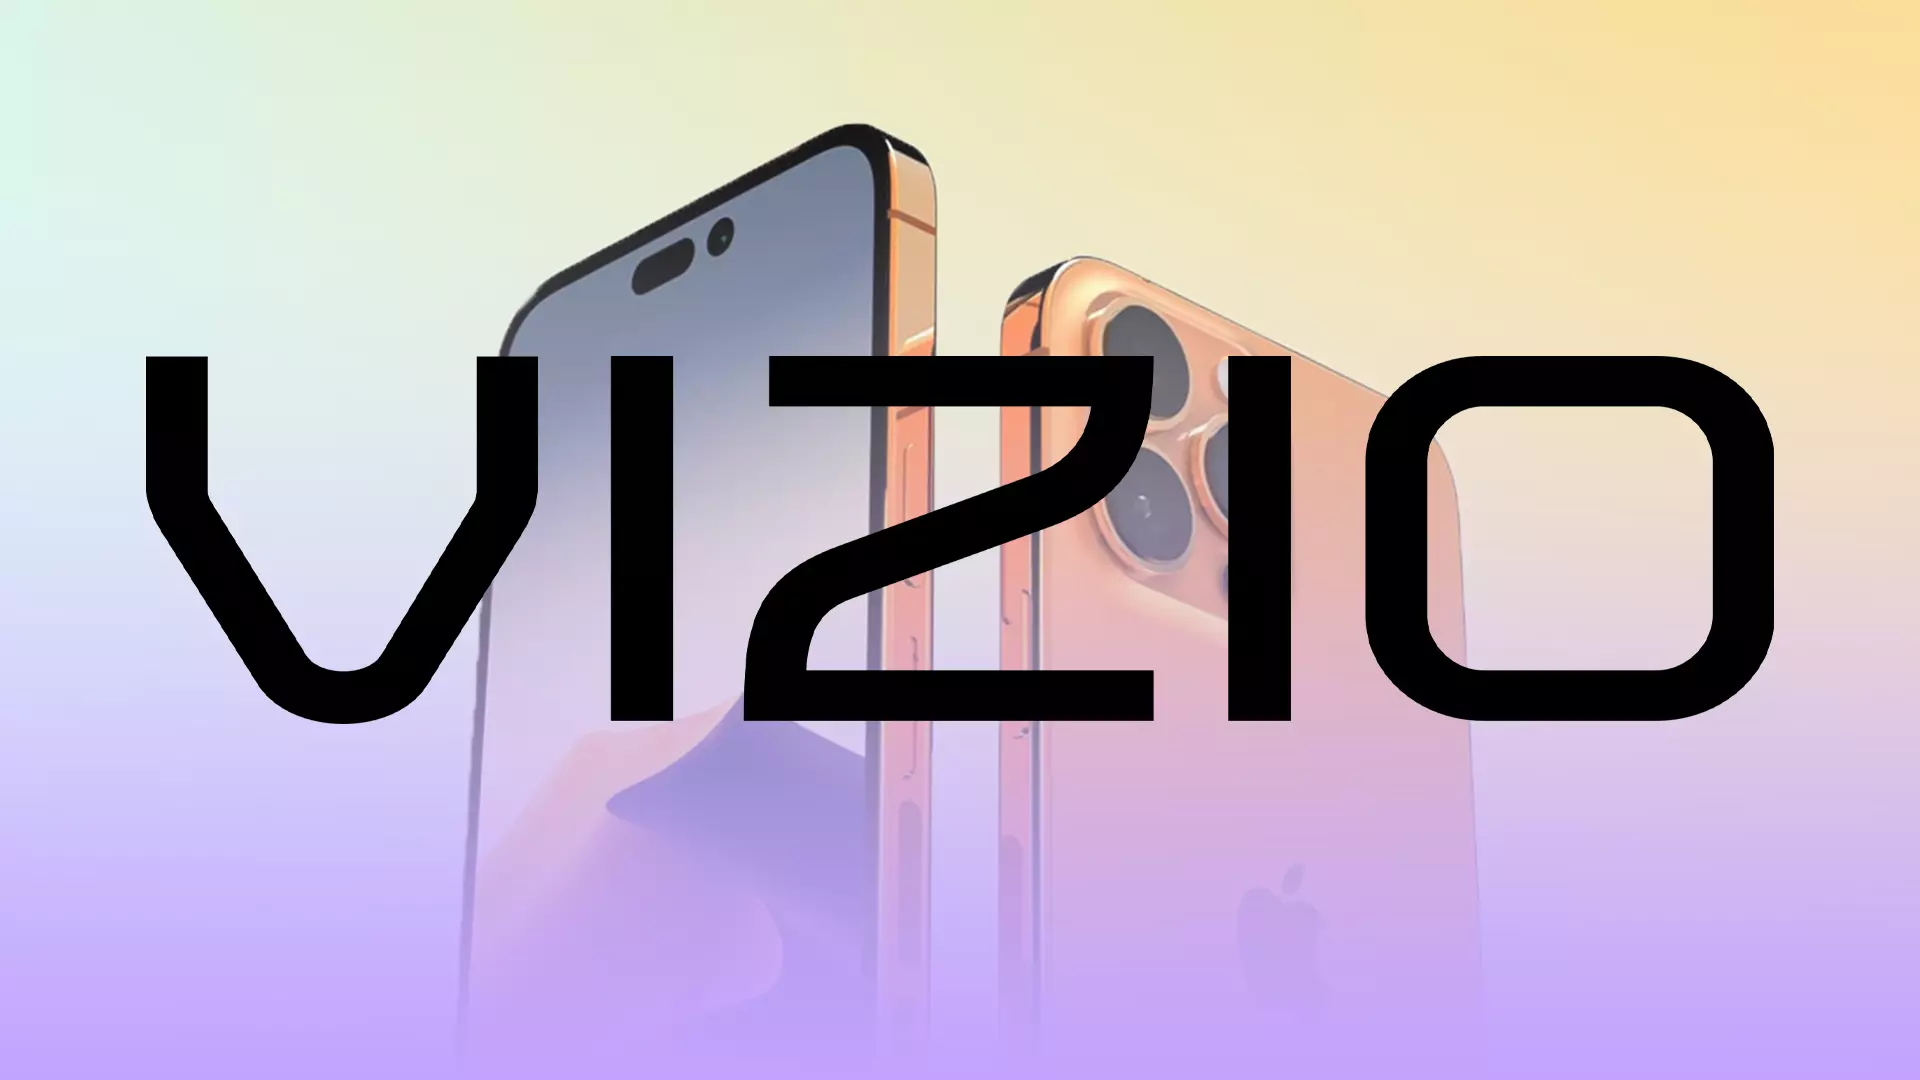 How to pair iPhone to Vizio TV